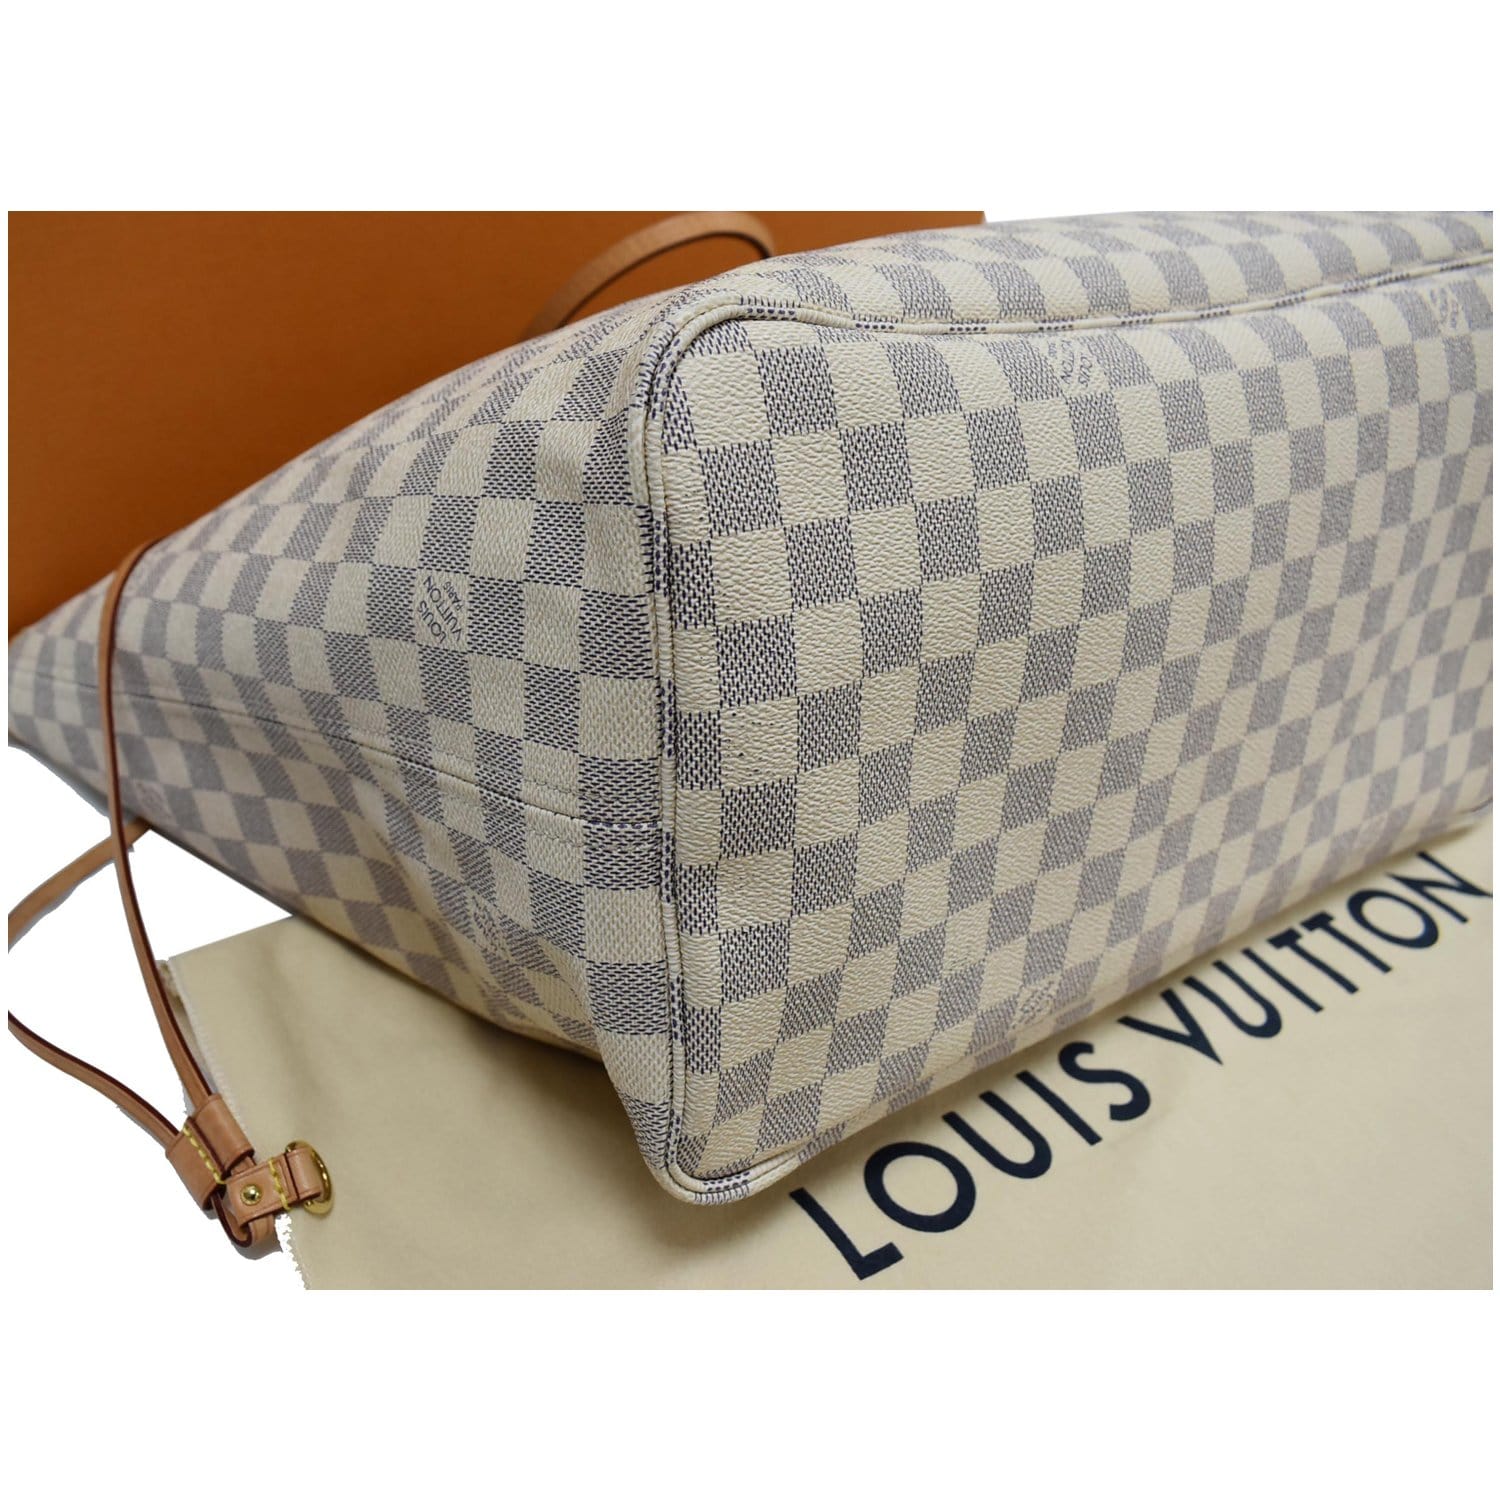 Louis Vuitton Neverfull Bag Gm Damier Azur Purse White Leather